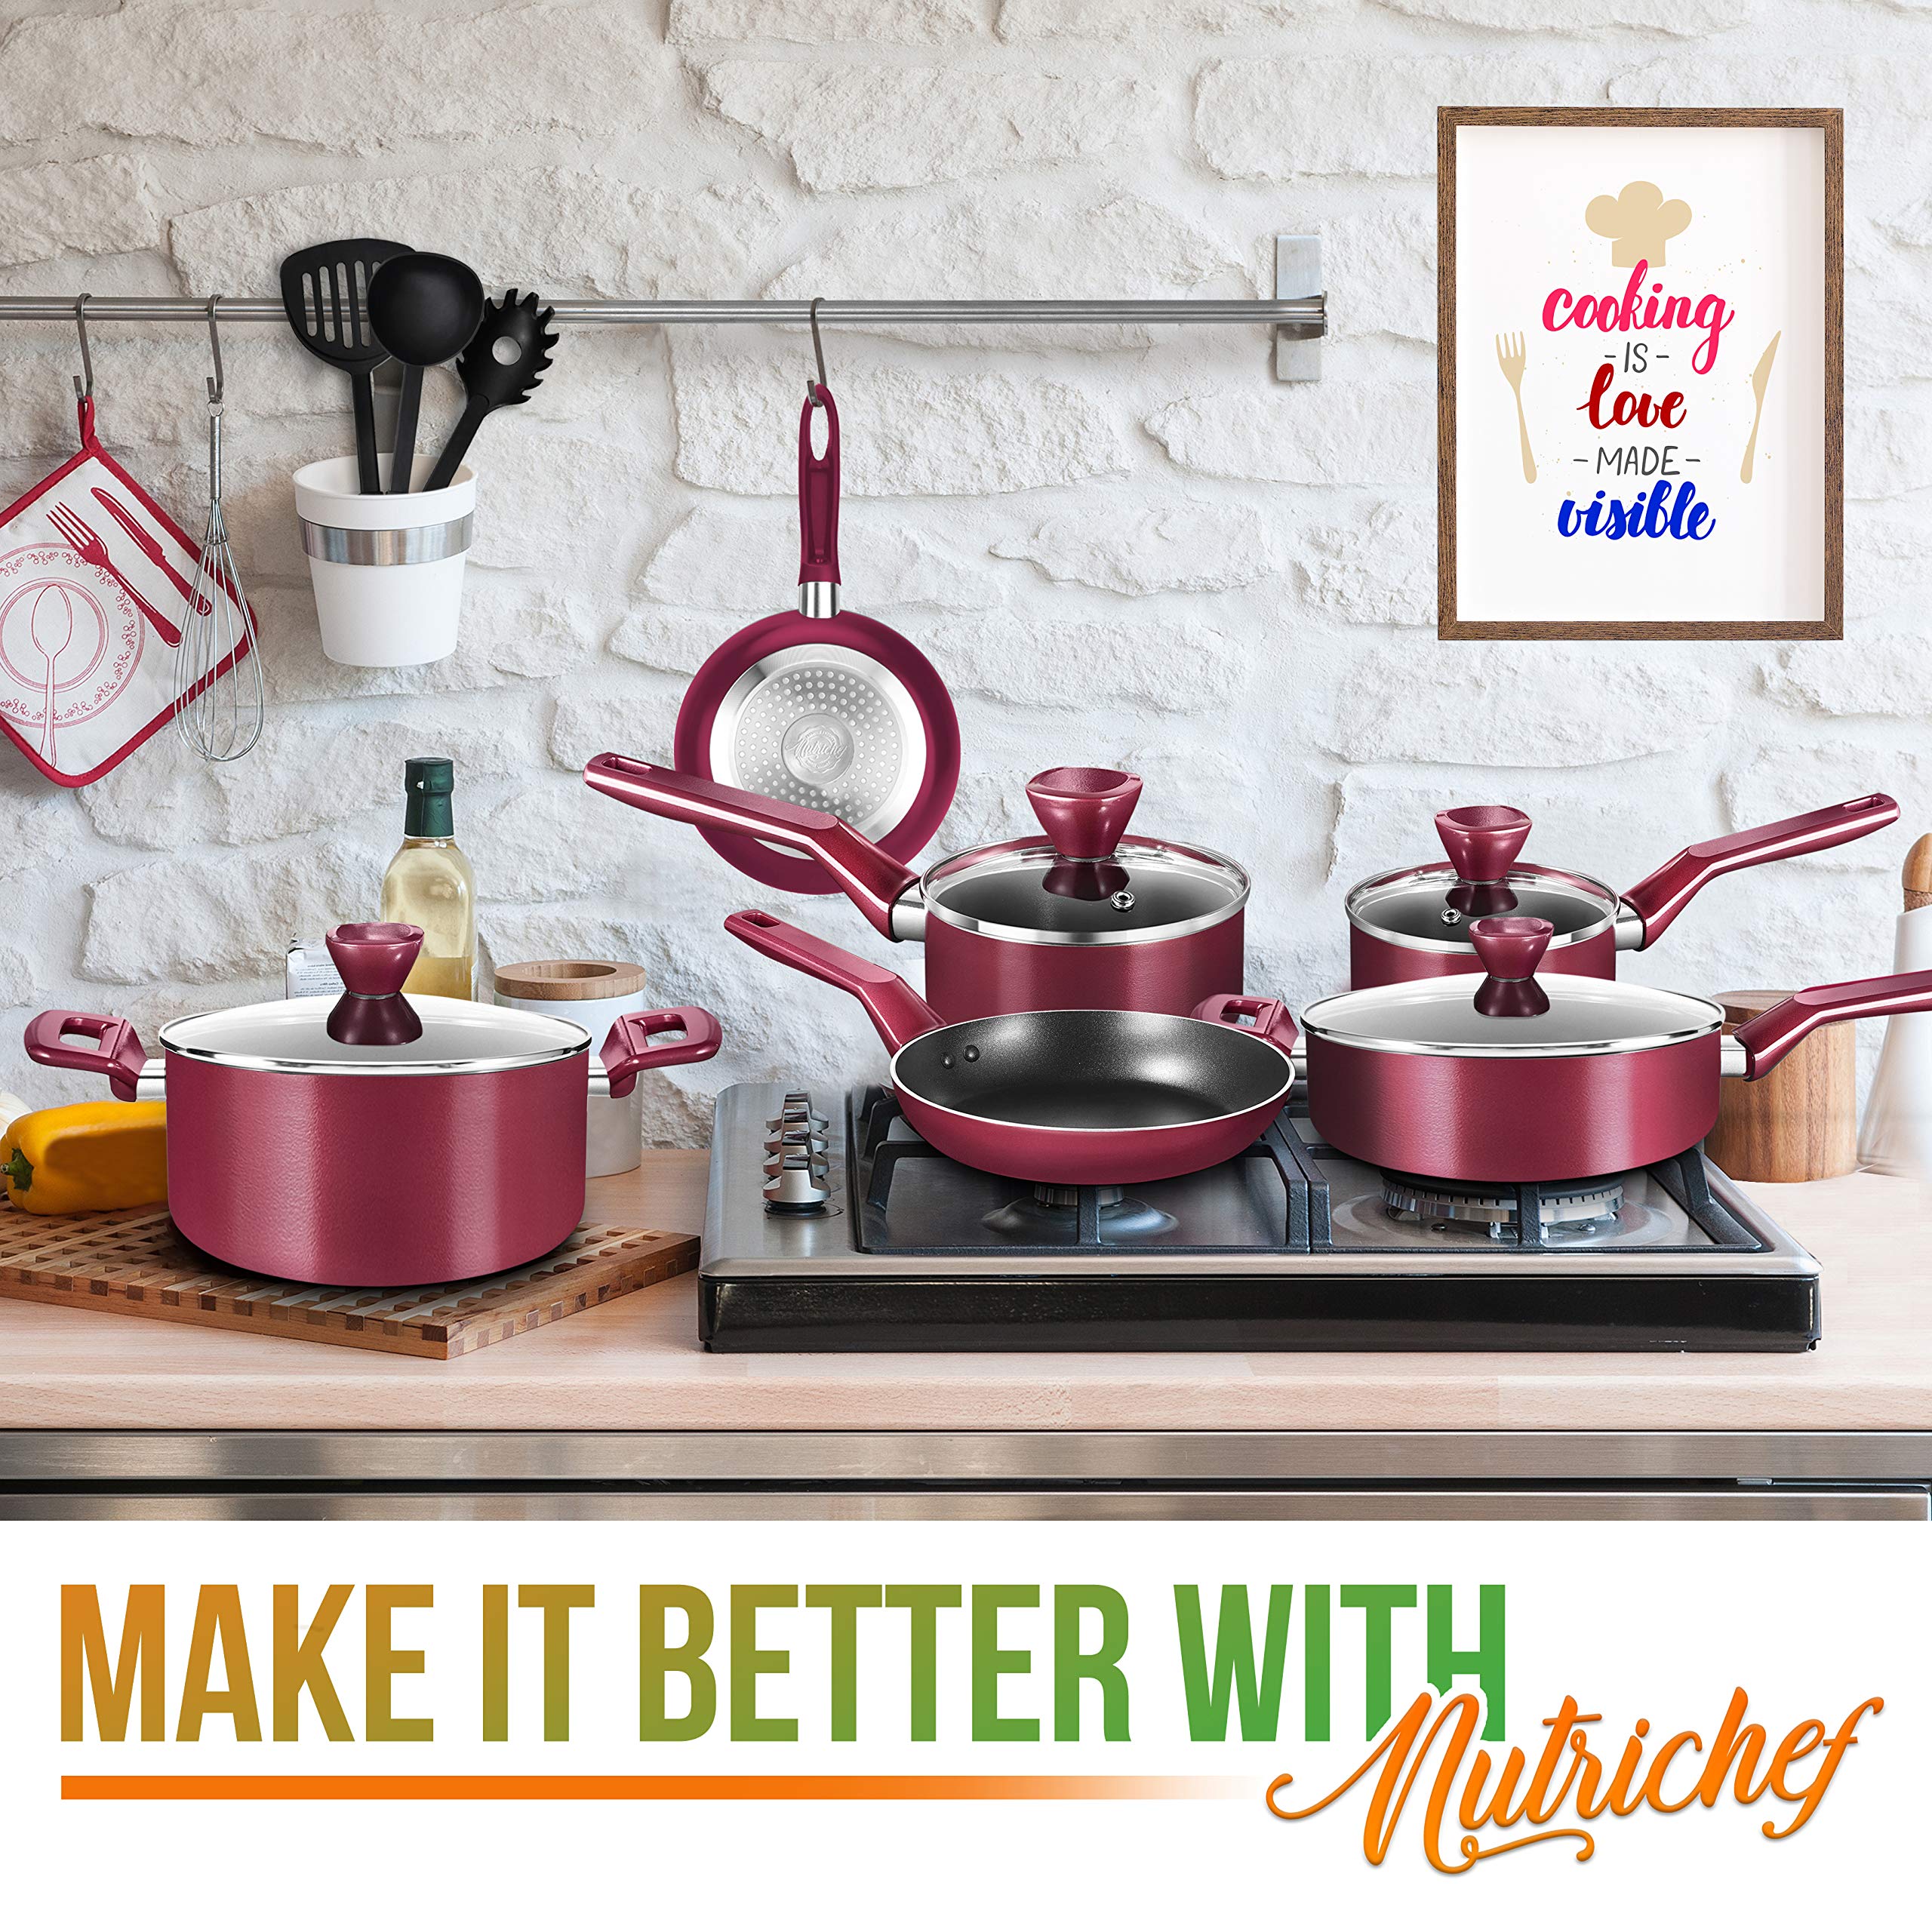 NutriChef 13 Pcs. Nonstick Kitchen Cookware PTFE/PFOA/PFOS-Free Heat Resistant Kitchenware Set w/Saucepan, Frying Pans, Cooking Pots, Casserole, Lids, & Utensils, Red NCCWA13RD